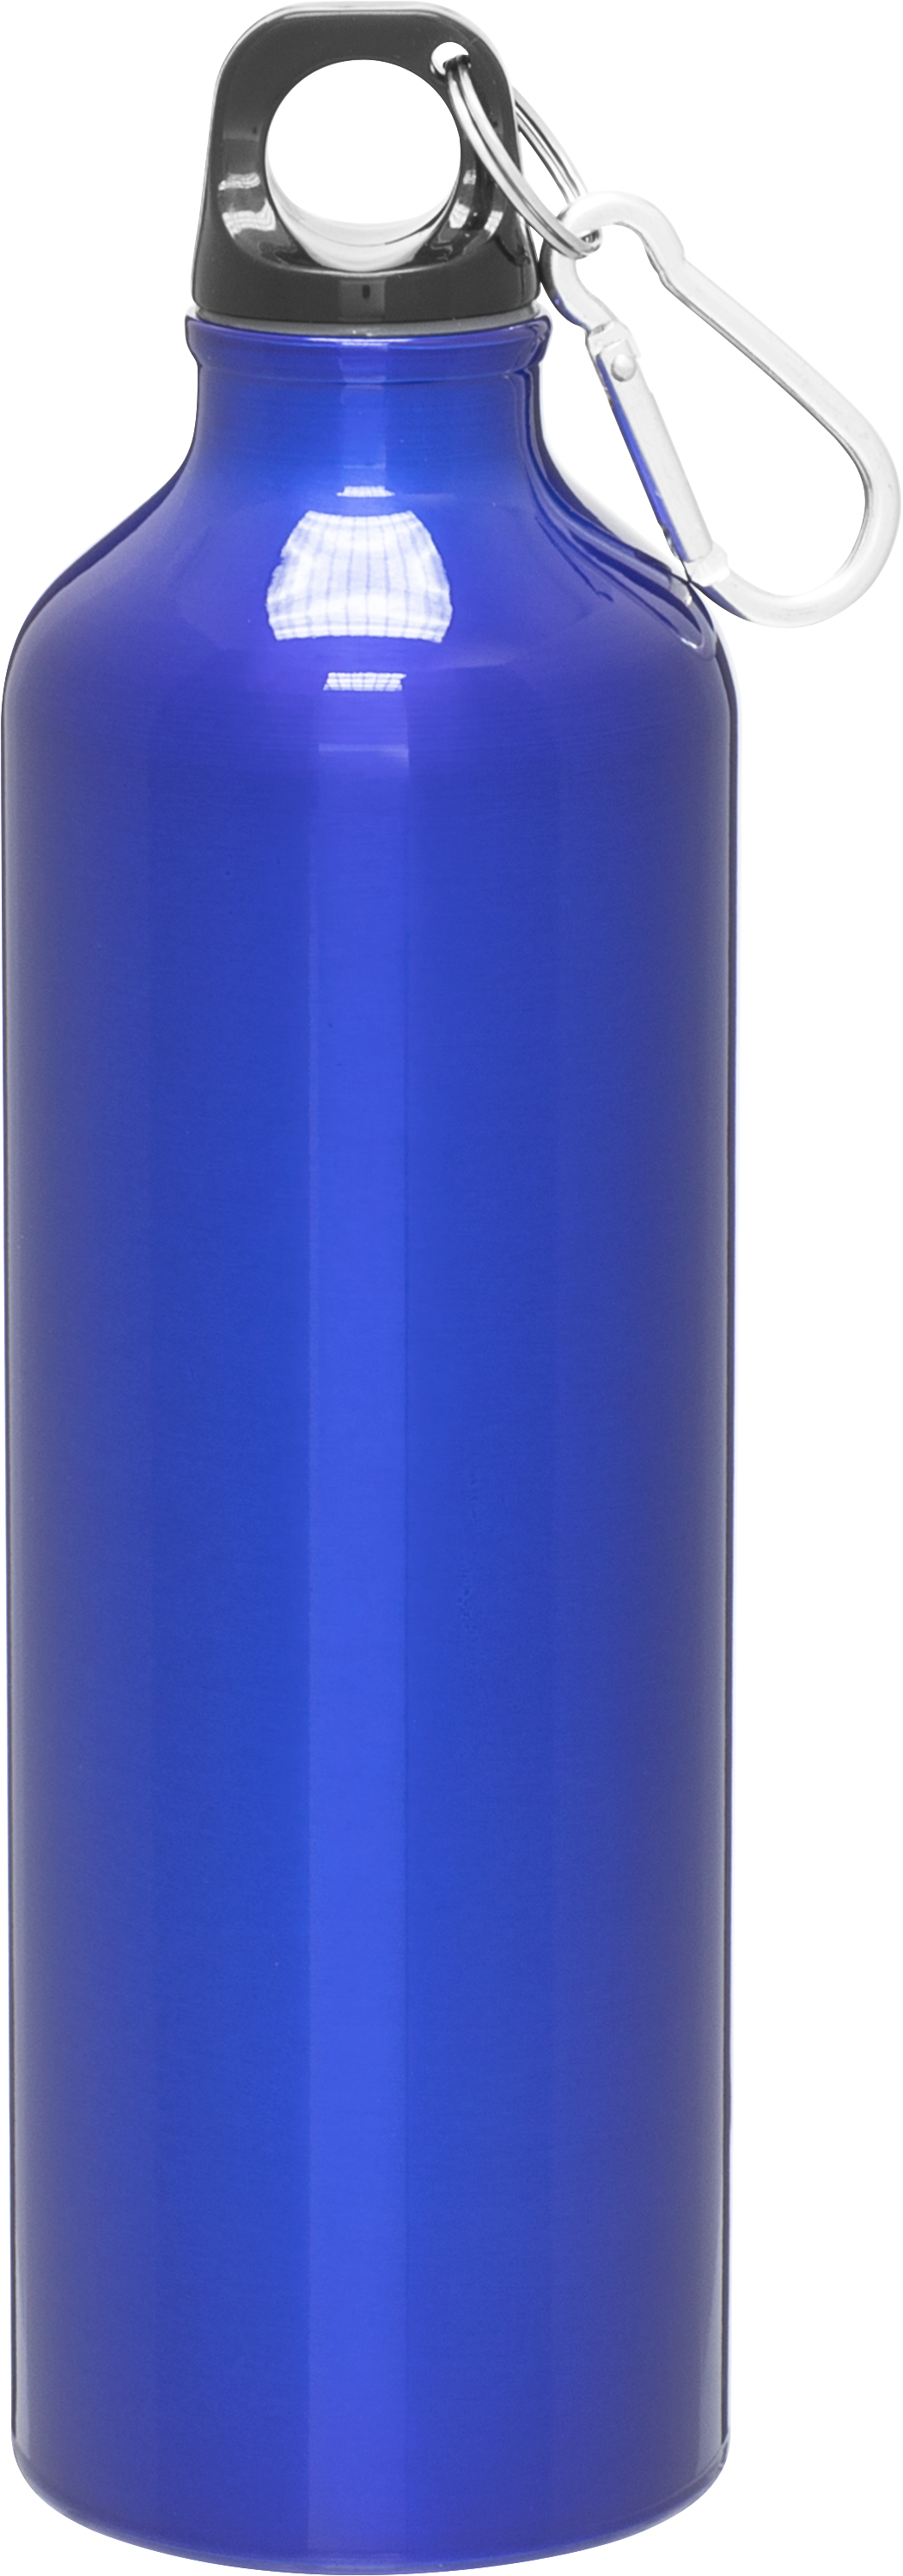 h2go Allure 28 oz single wall aluminum water bottle